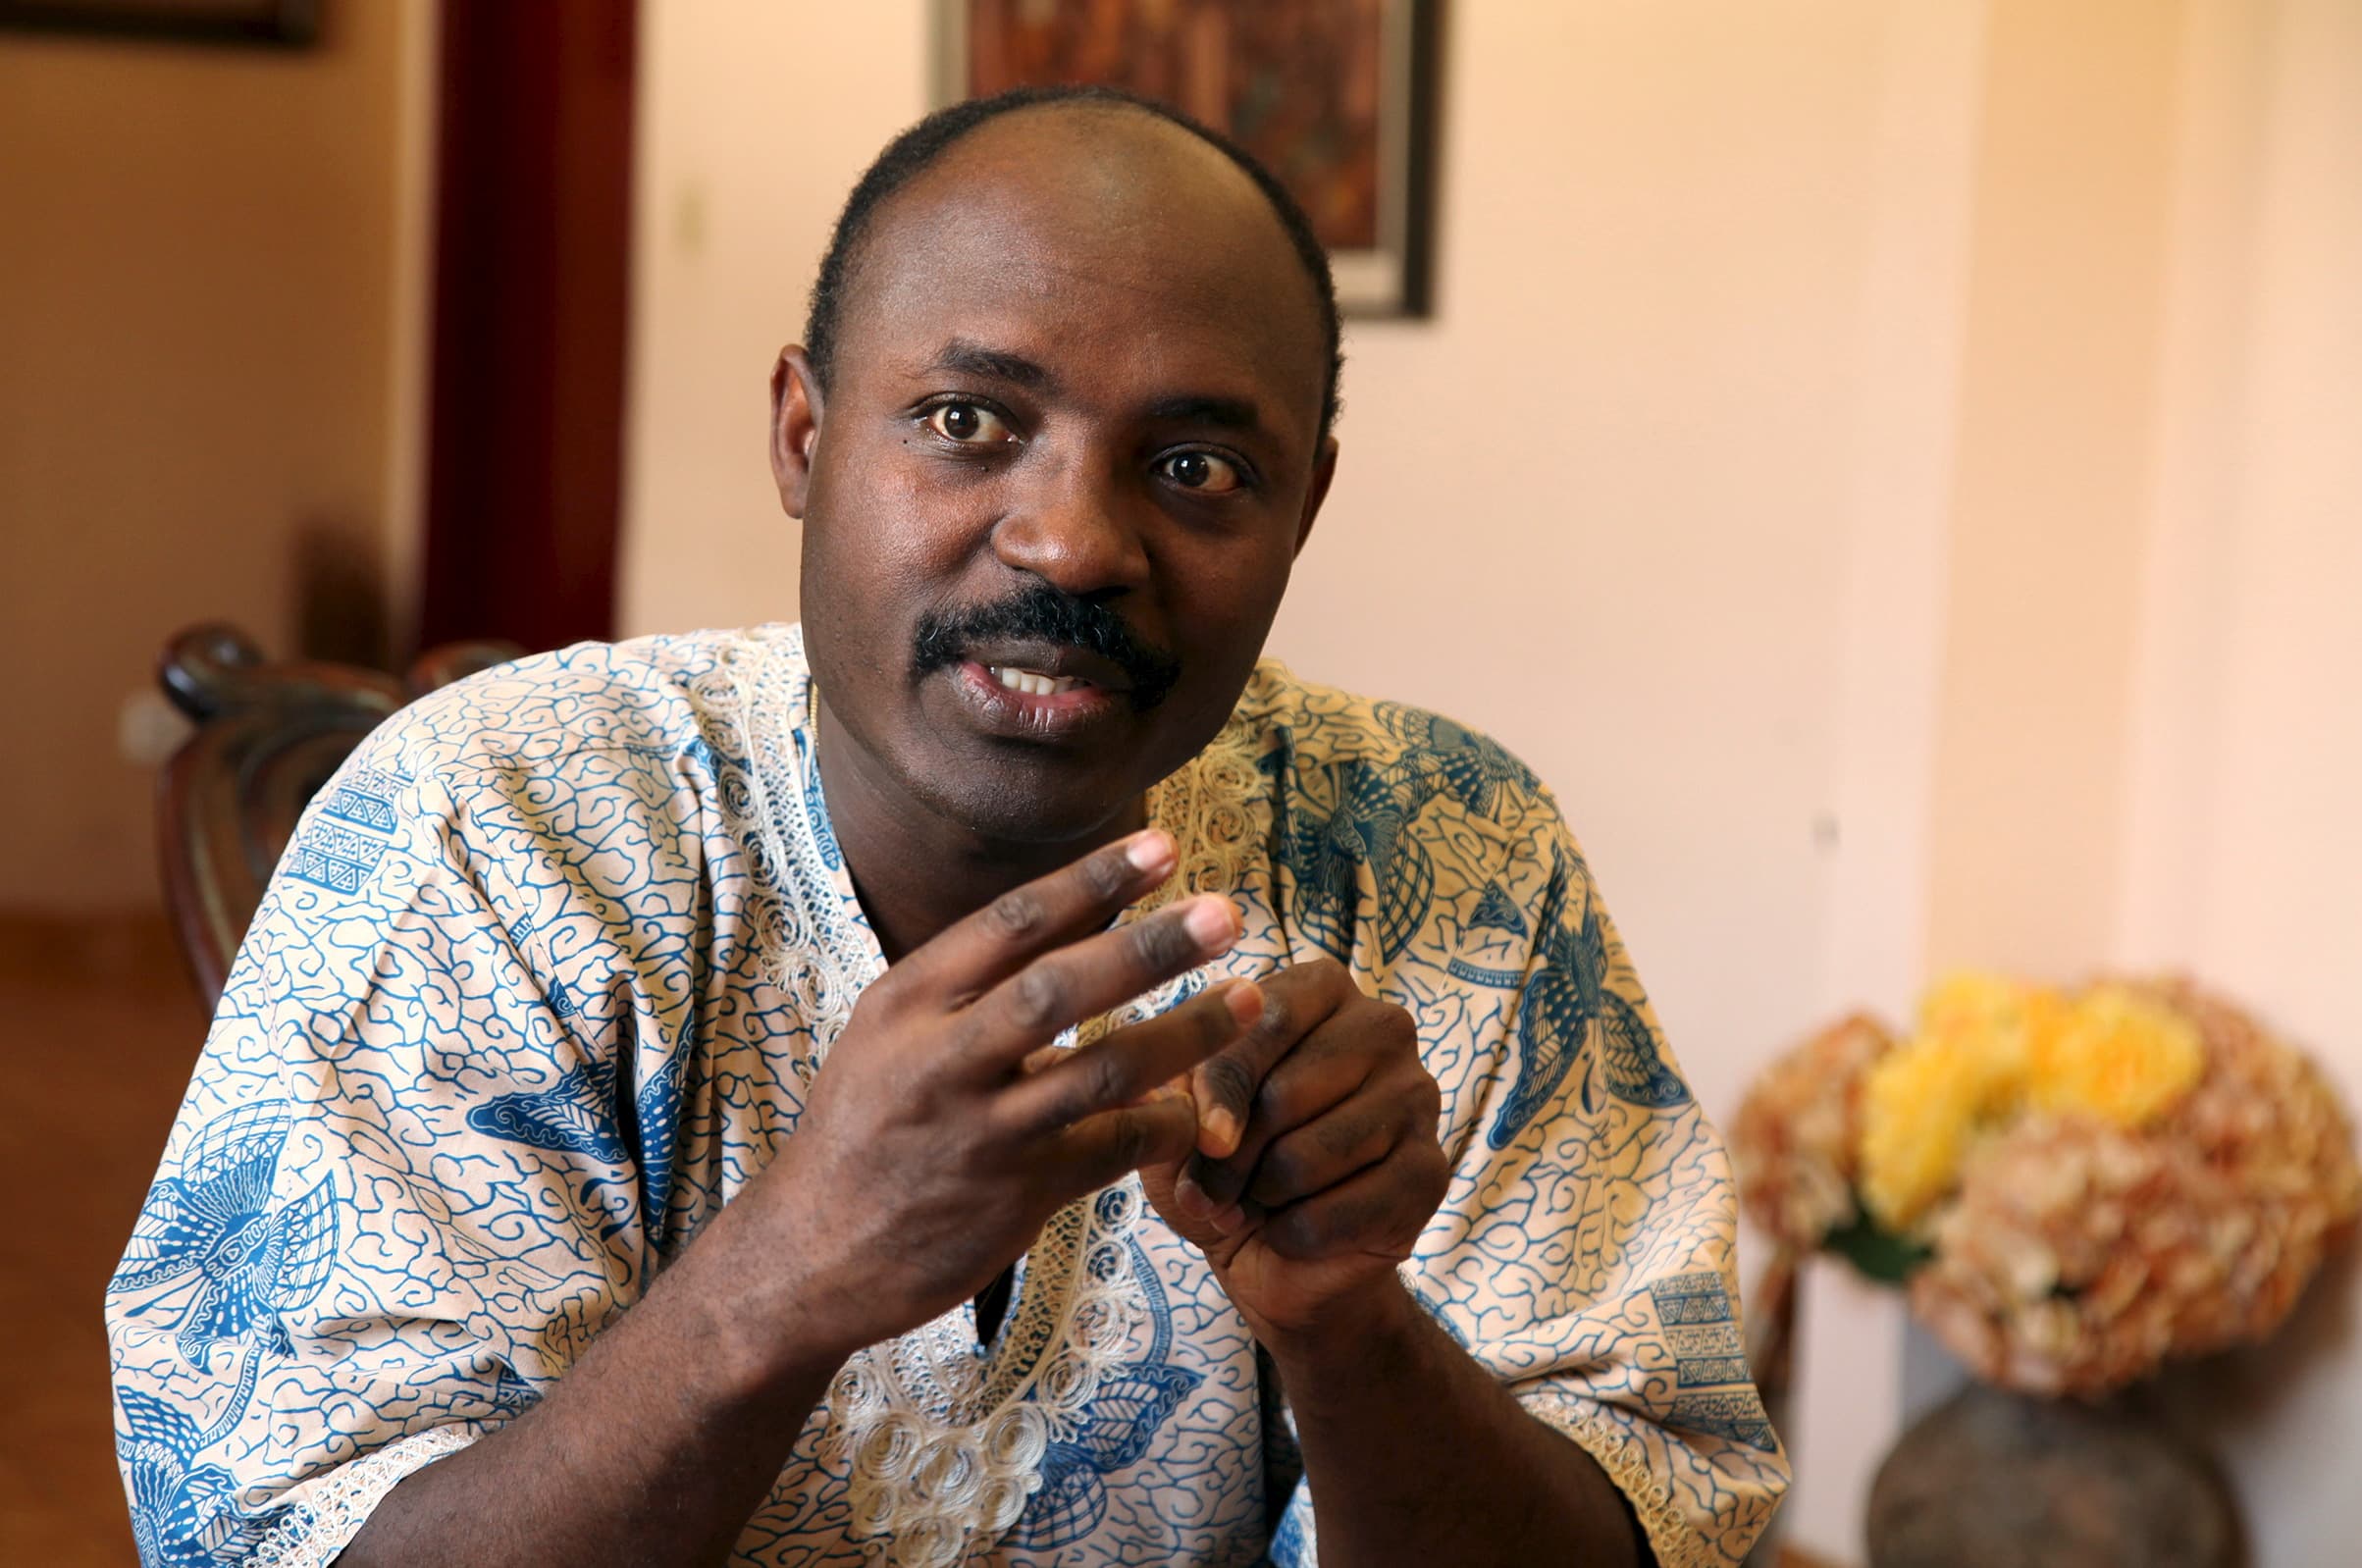 Rafael Marques de Morais gestures during an interview at his home in Luanda, 12 May 2015, REUTERS/Herculano Coroado